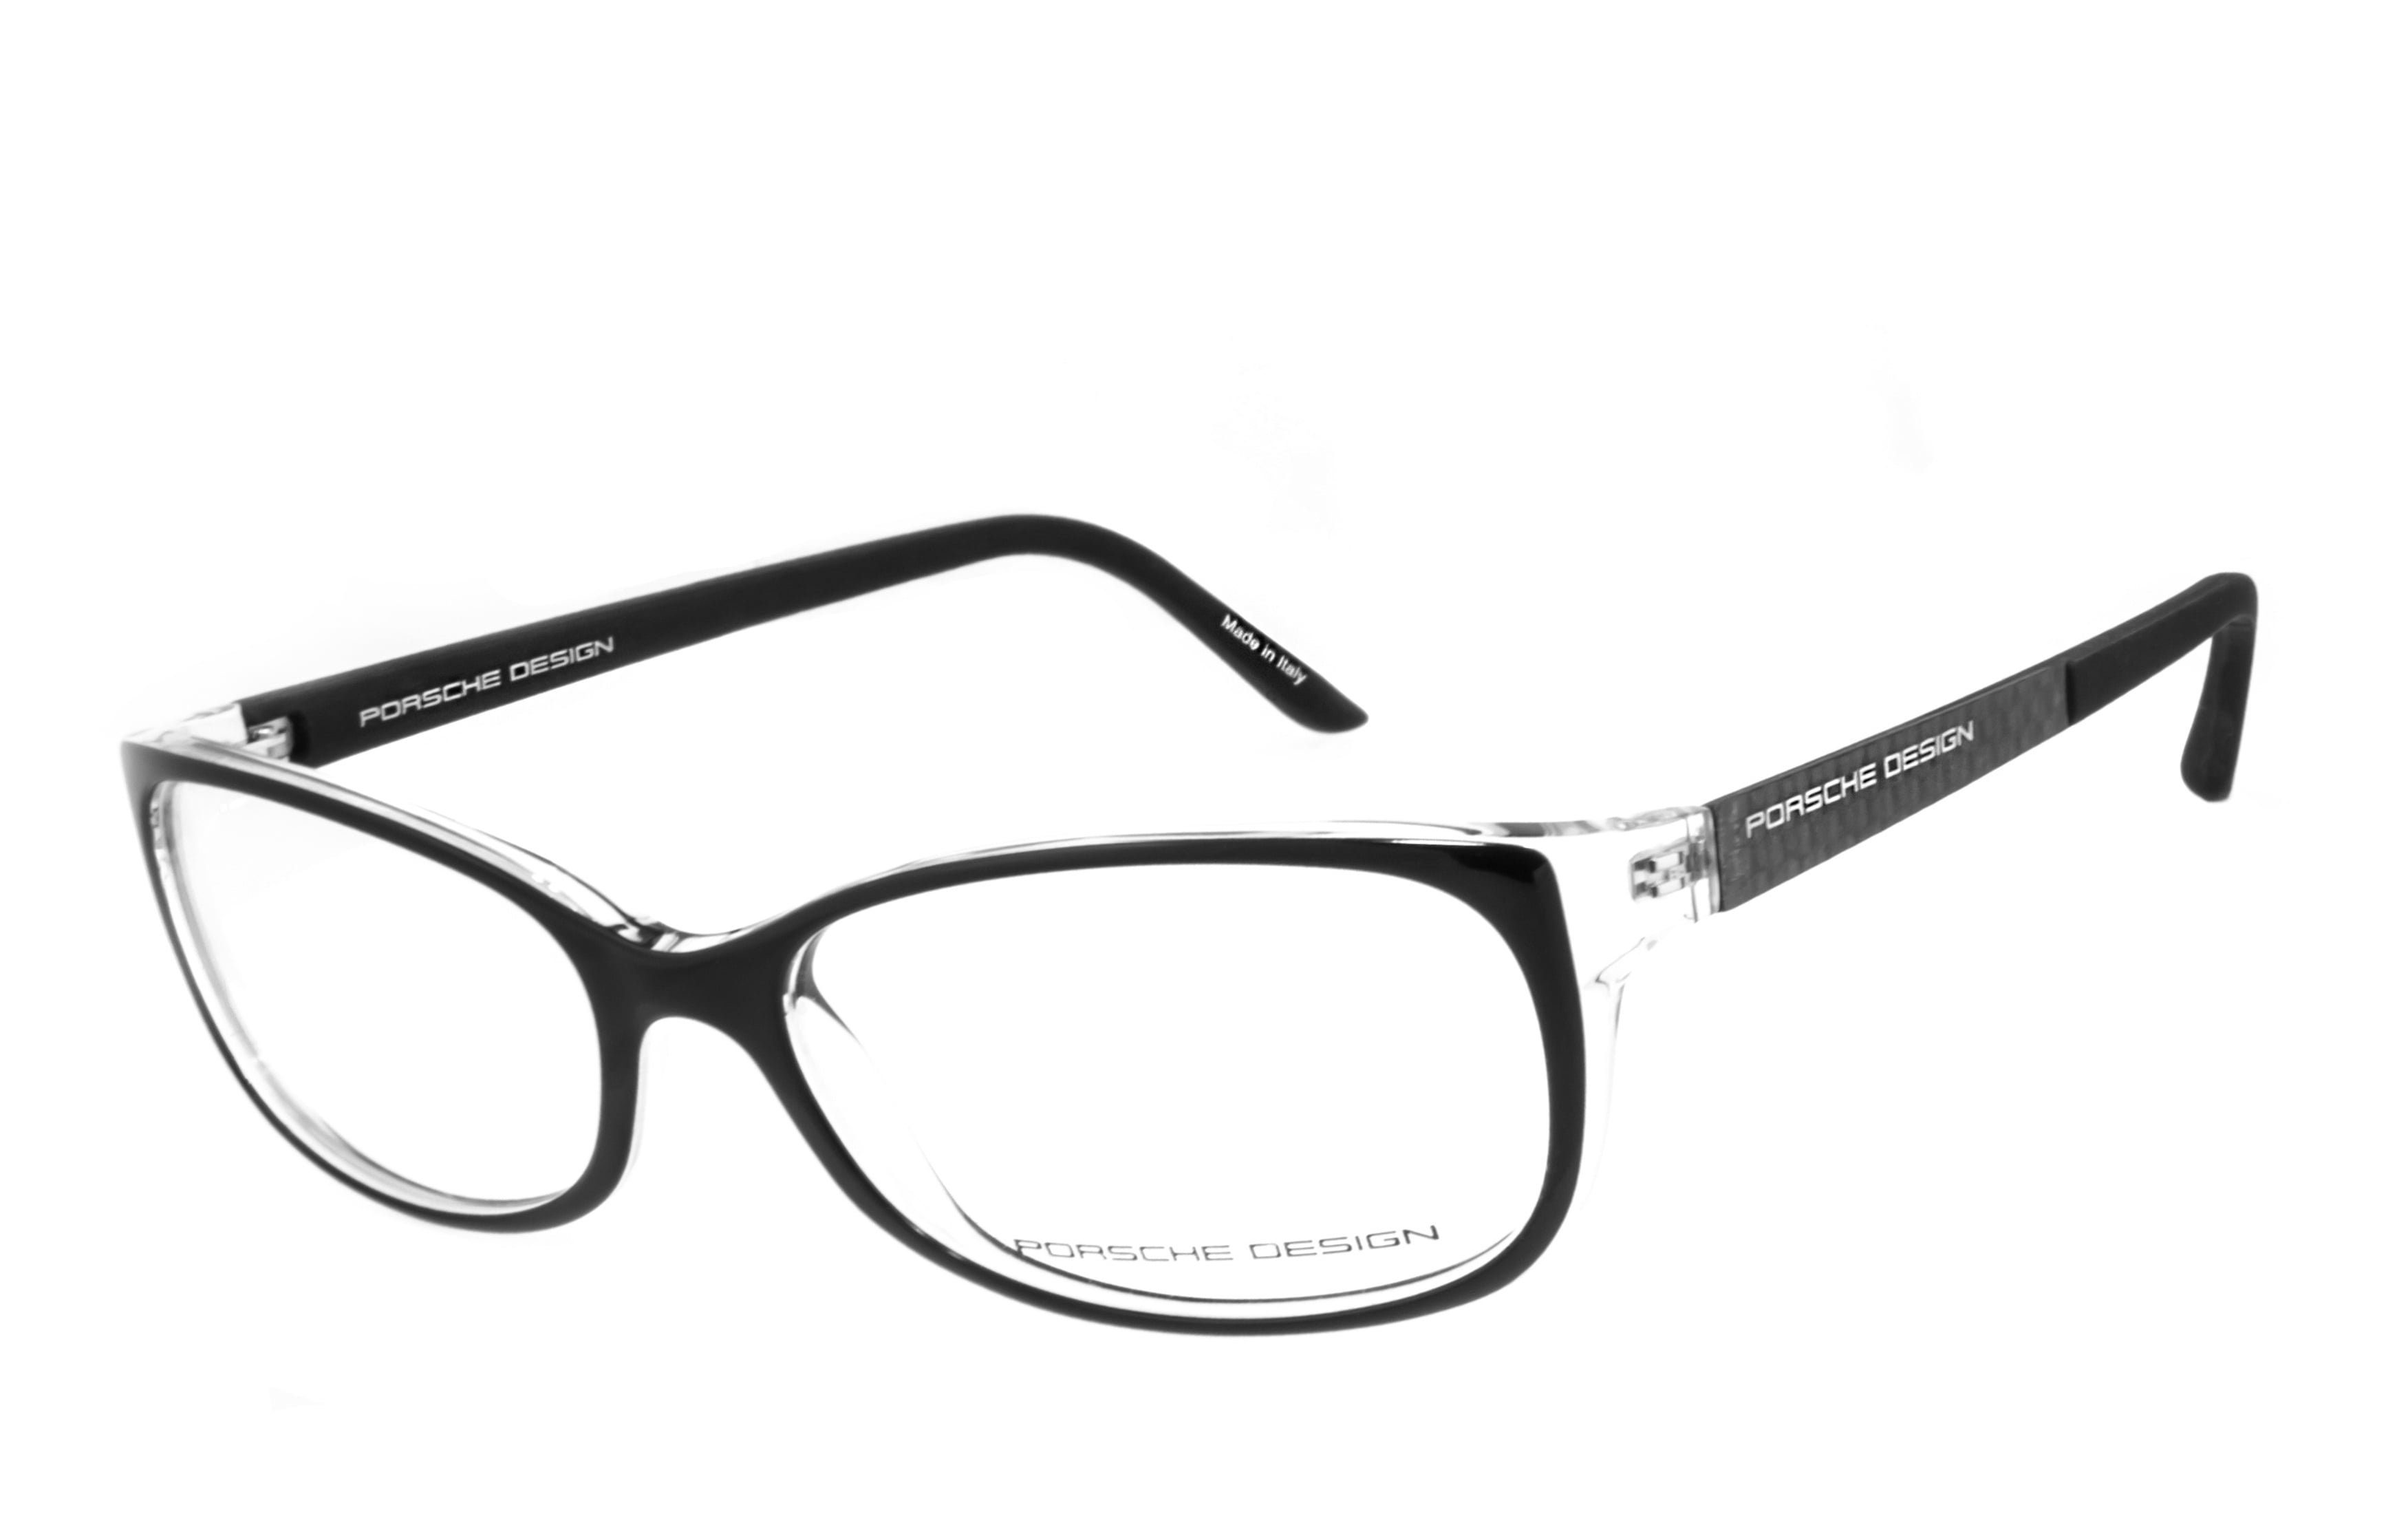 PORSCHE Design Brille P8247 A, HLT® Qualitätsgläser